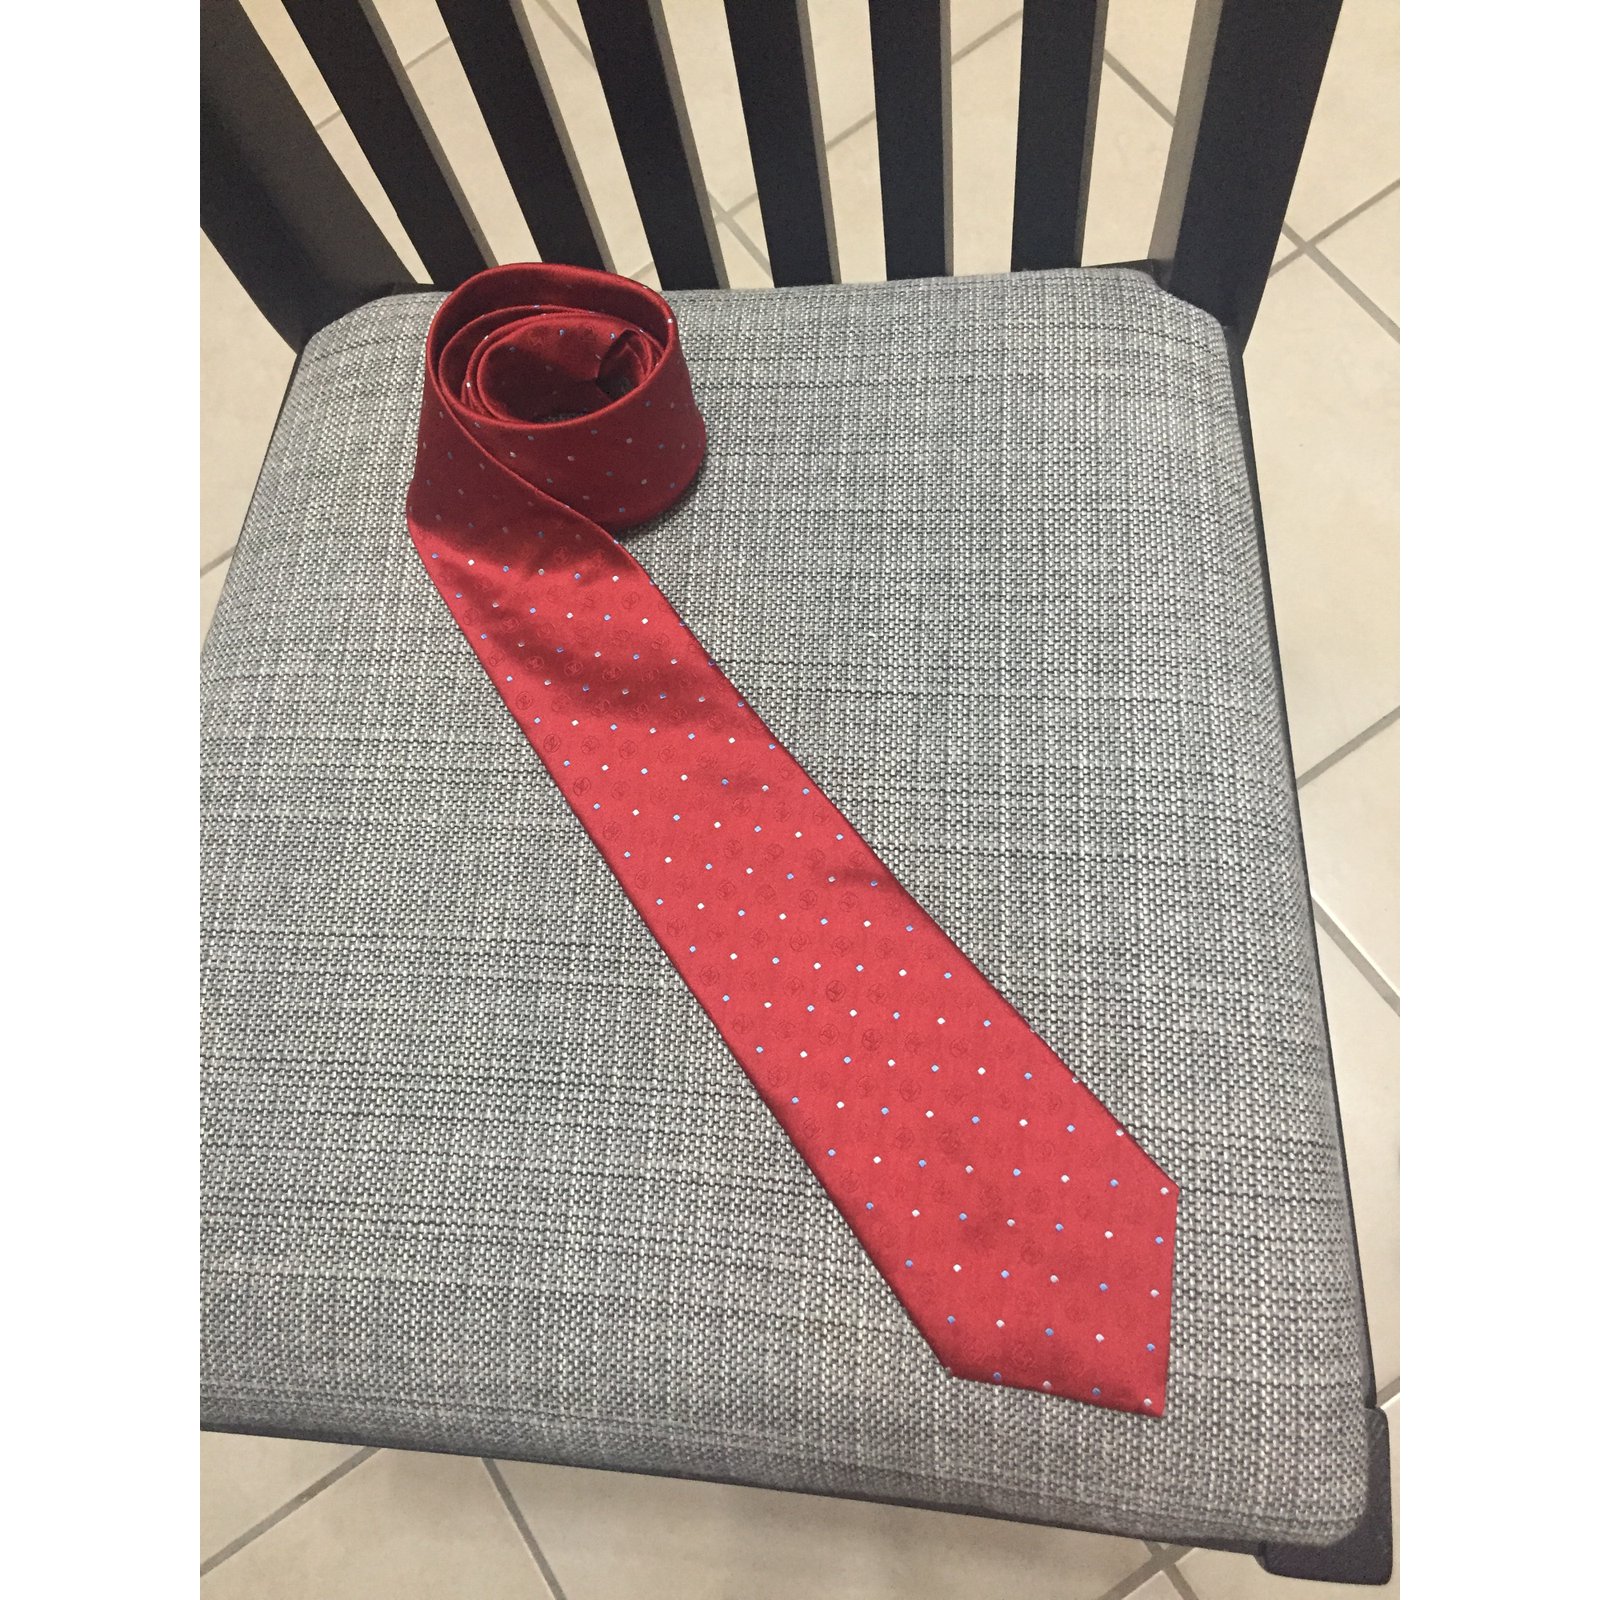 Louis Vuitton tie in red silk - DOWNTOWN UPTOWN Genève